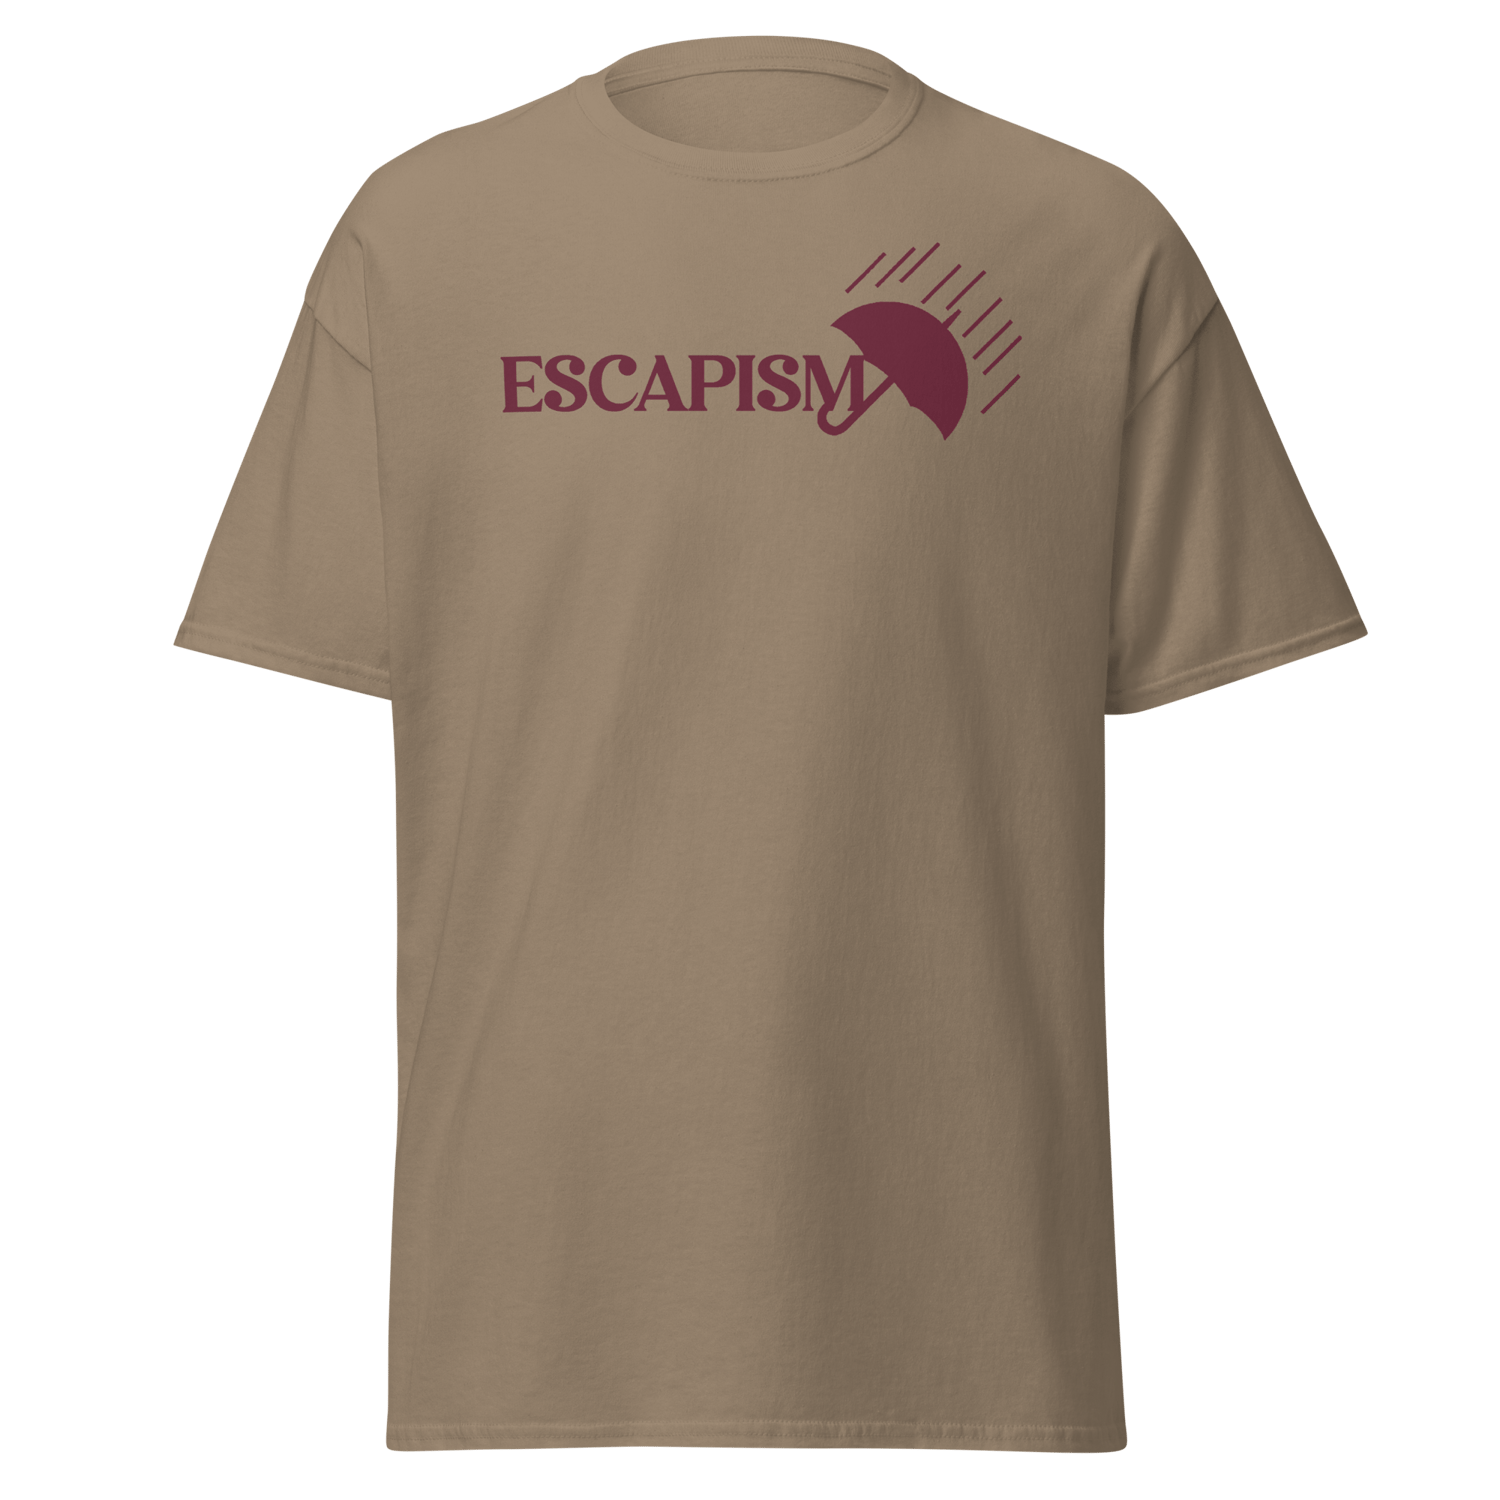 Image of Escapism T-Shirt